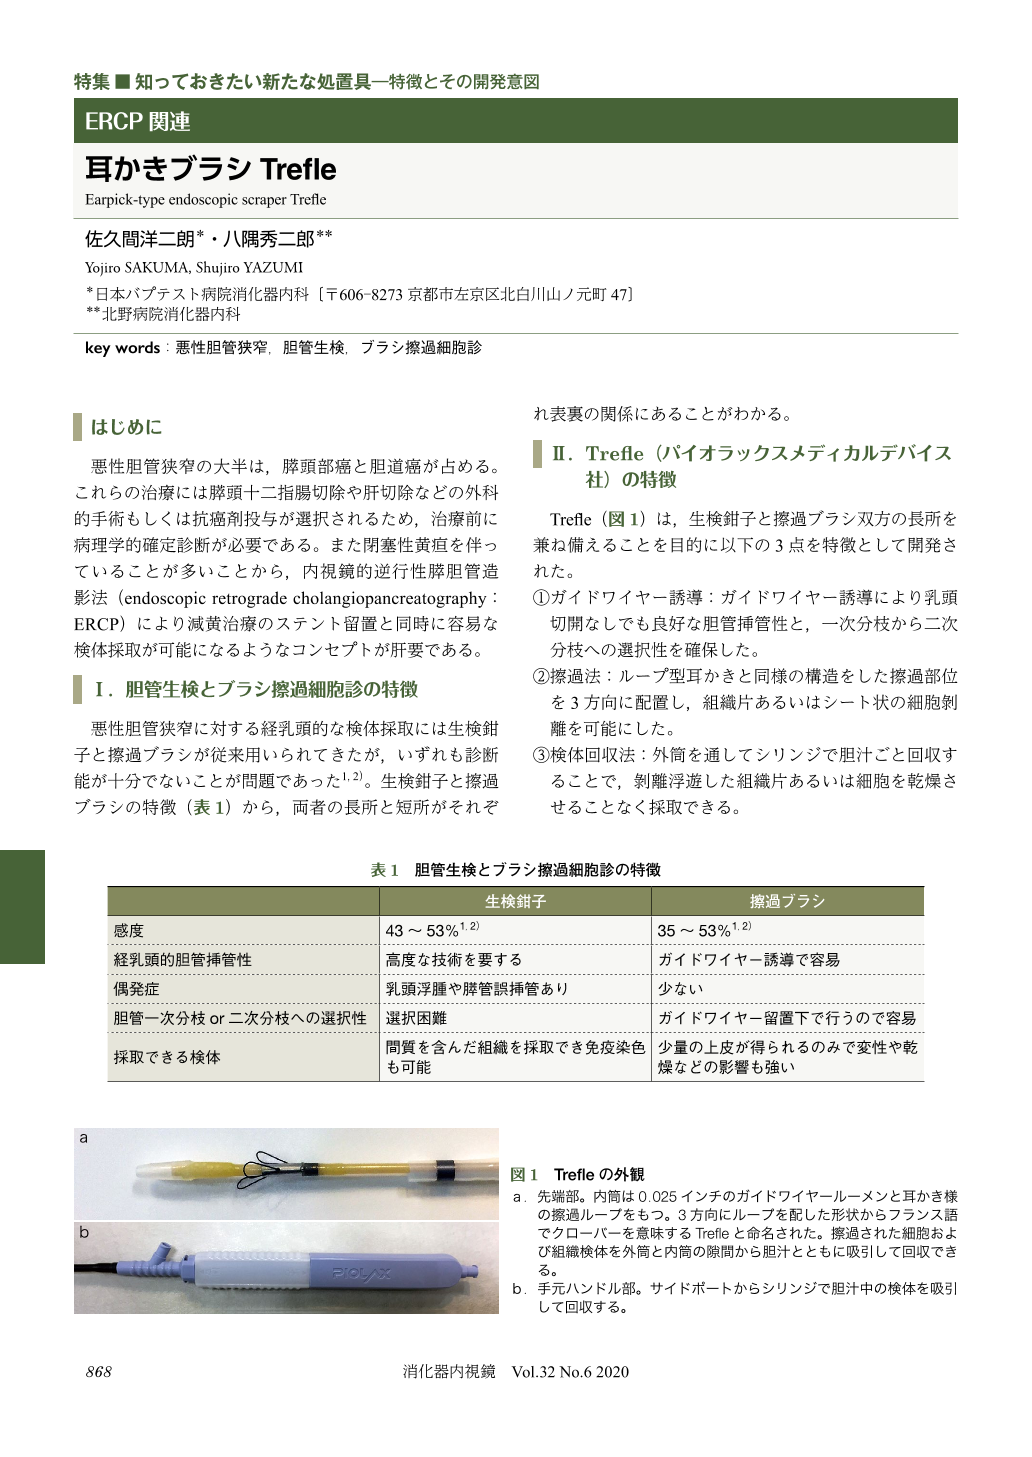 ERCP関連 耳かきブラシTrefle (消化器内視鏡 32巻6号) | 医書.jp